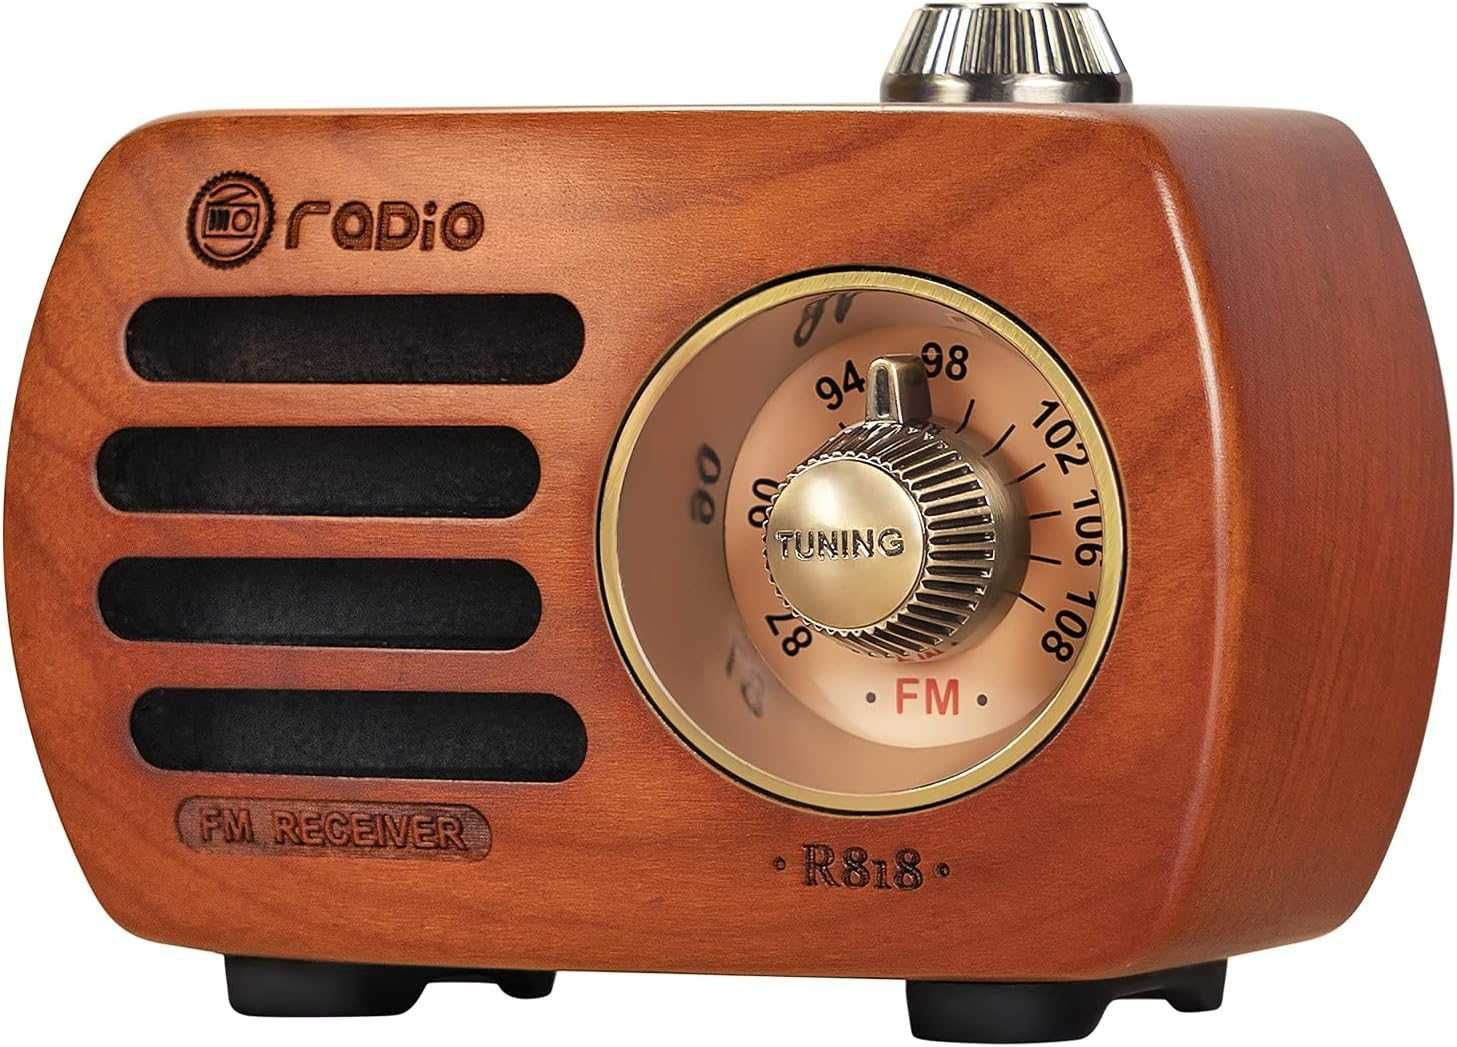 PRUNUS R-818 drewniane radio małe